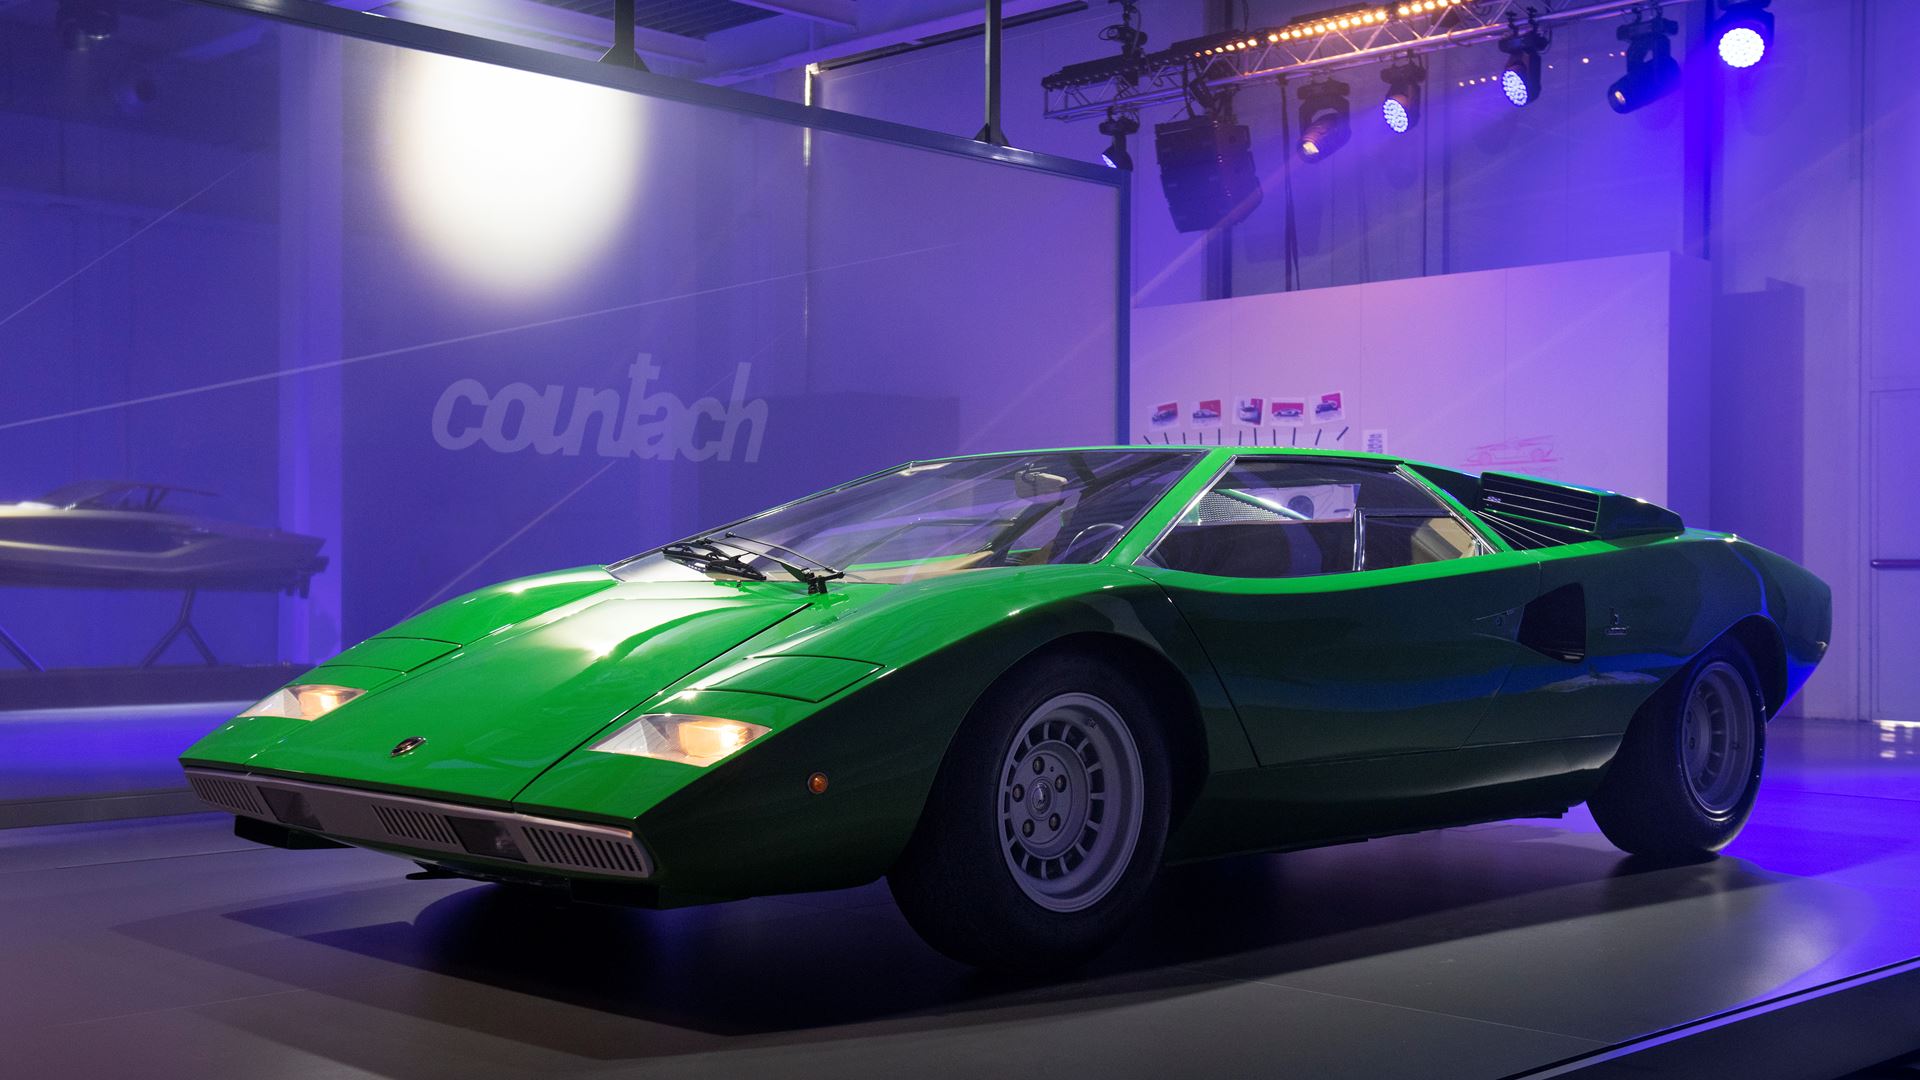 Lamborghini presents the Countach LPI 800-4 at Milan Design Week, celebrating its uniquely inspirational design - Image 4